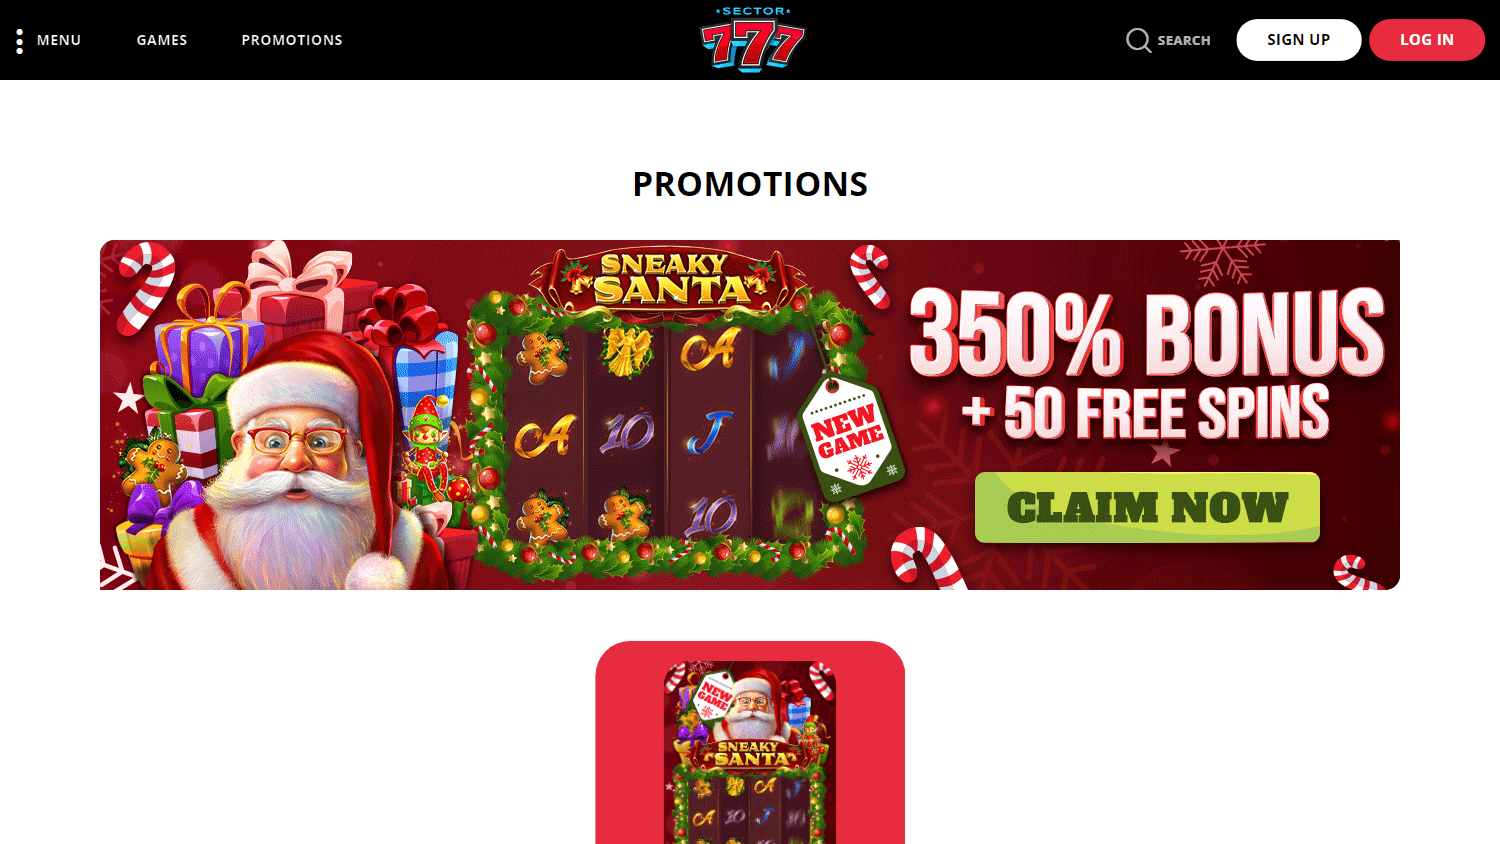 sector_777_casino_promotions_desktop